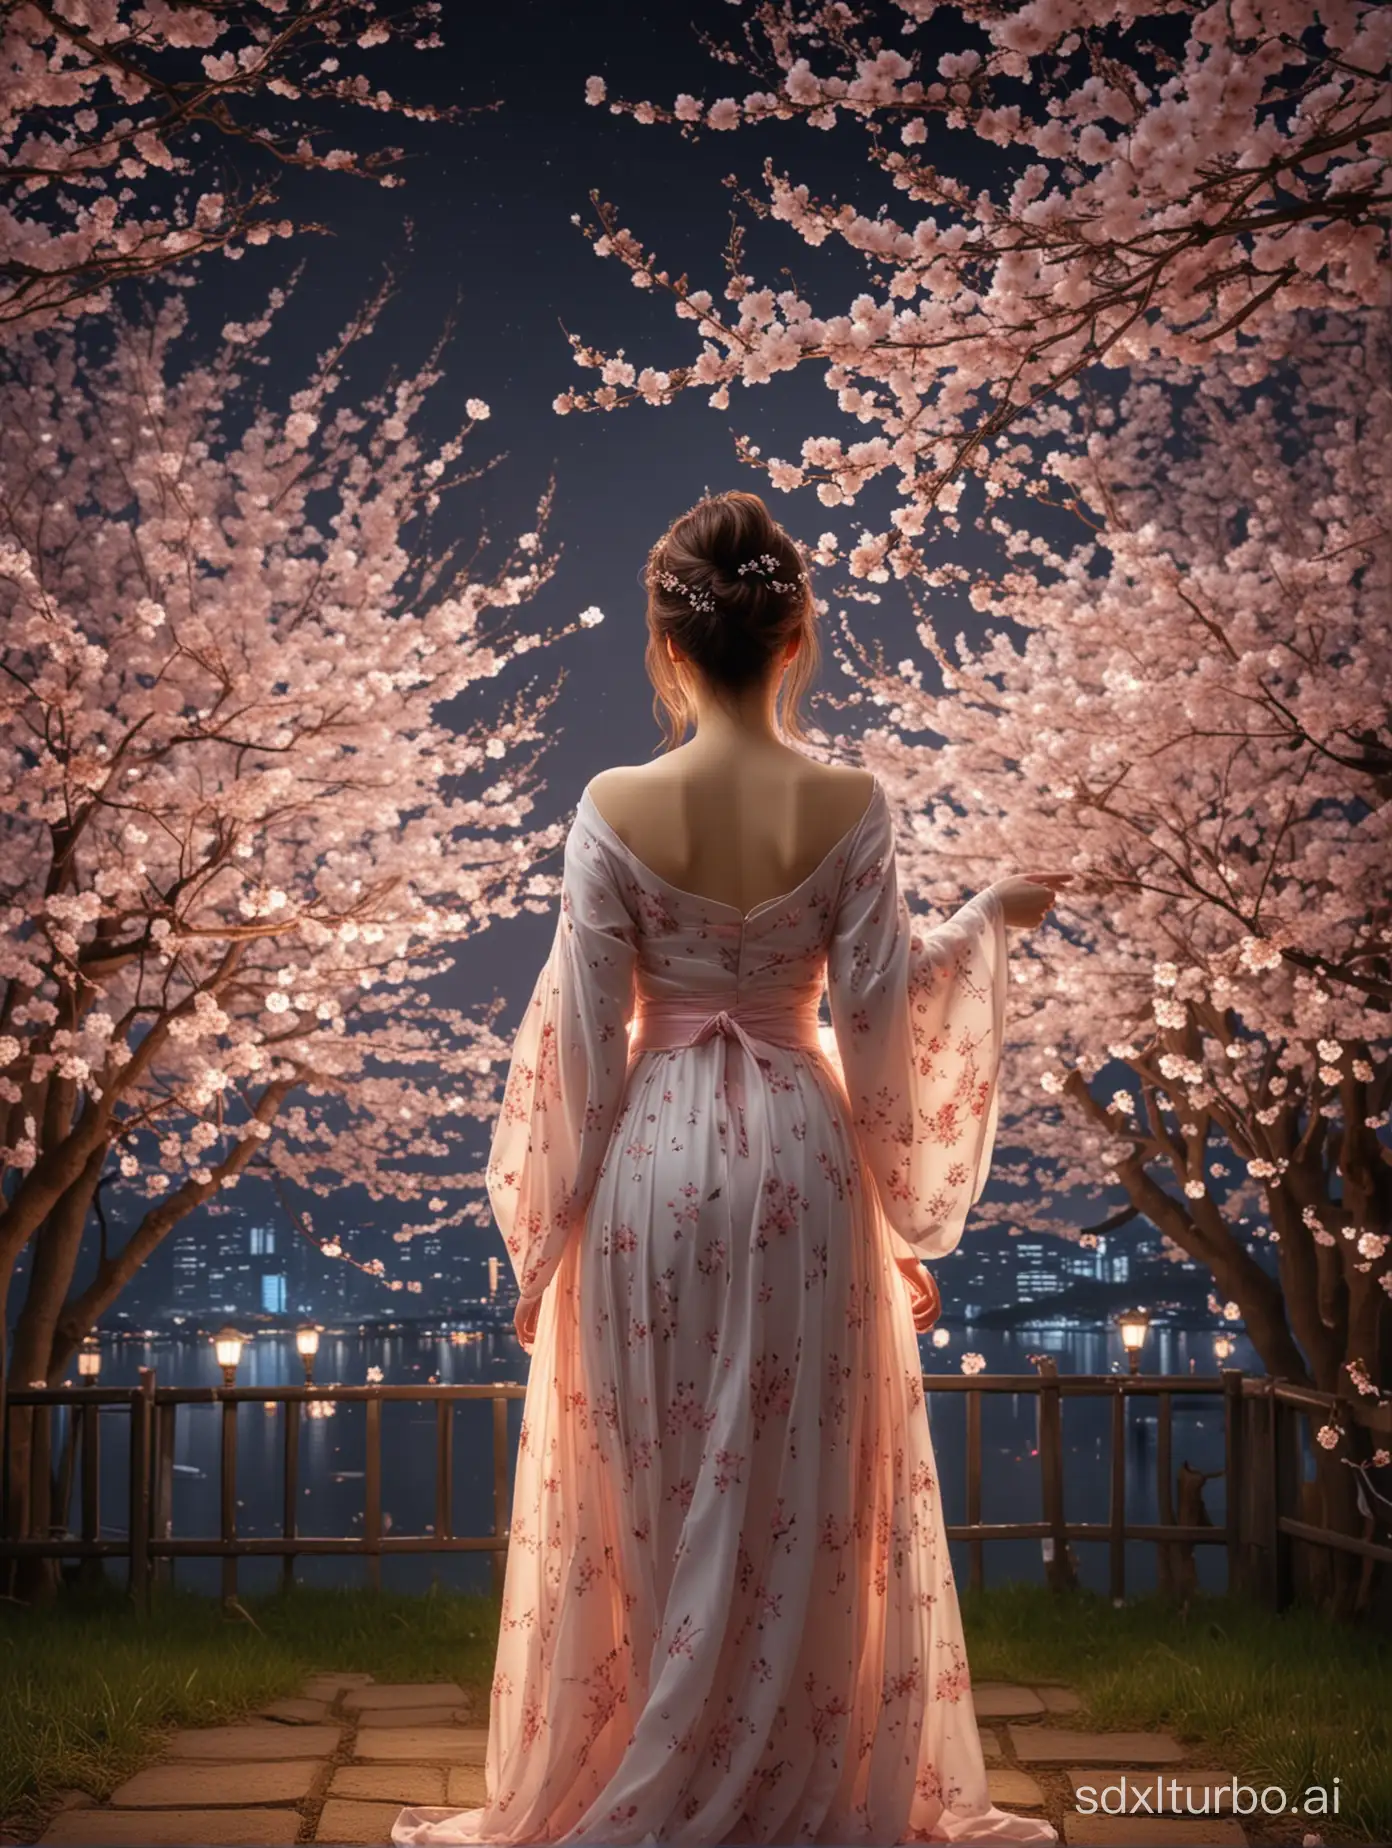 Elegant-Woman-Admiring-Illuminated-Cherry-Blossoms-at-Night